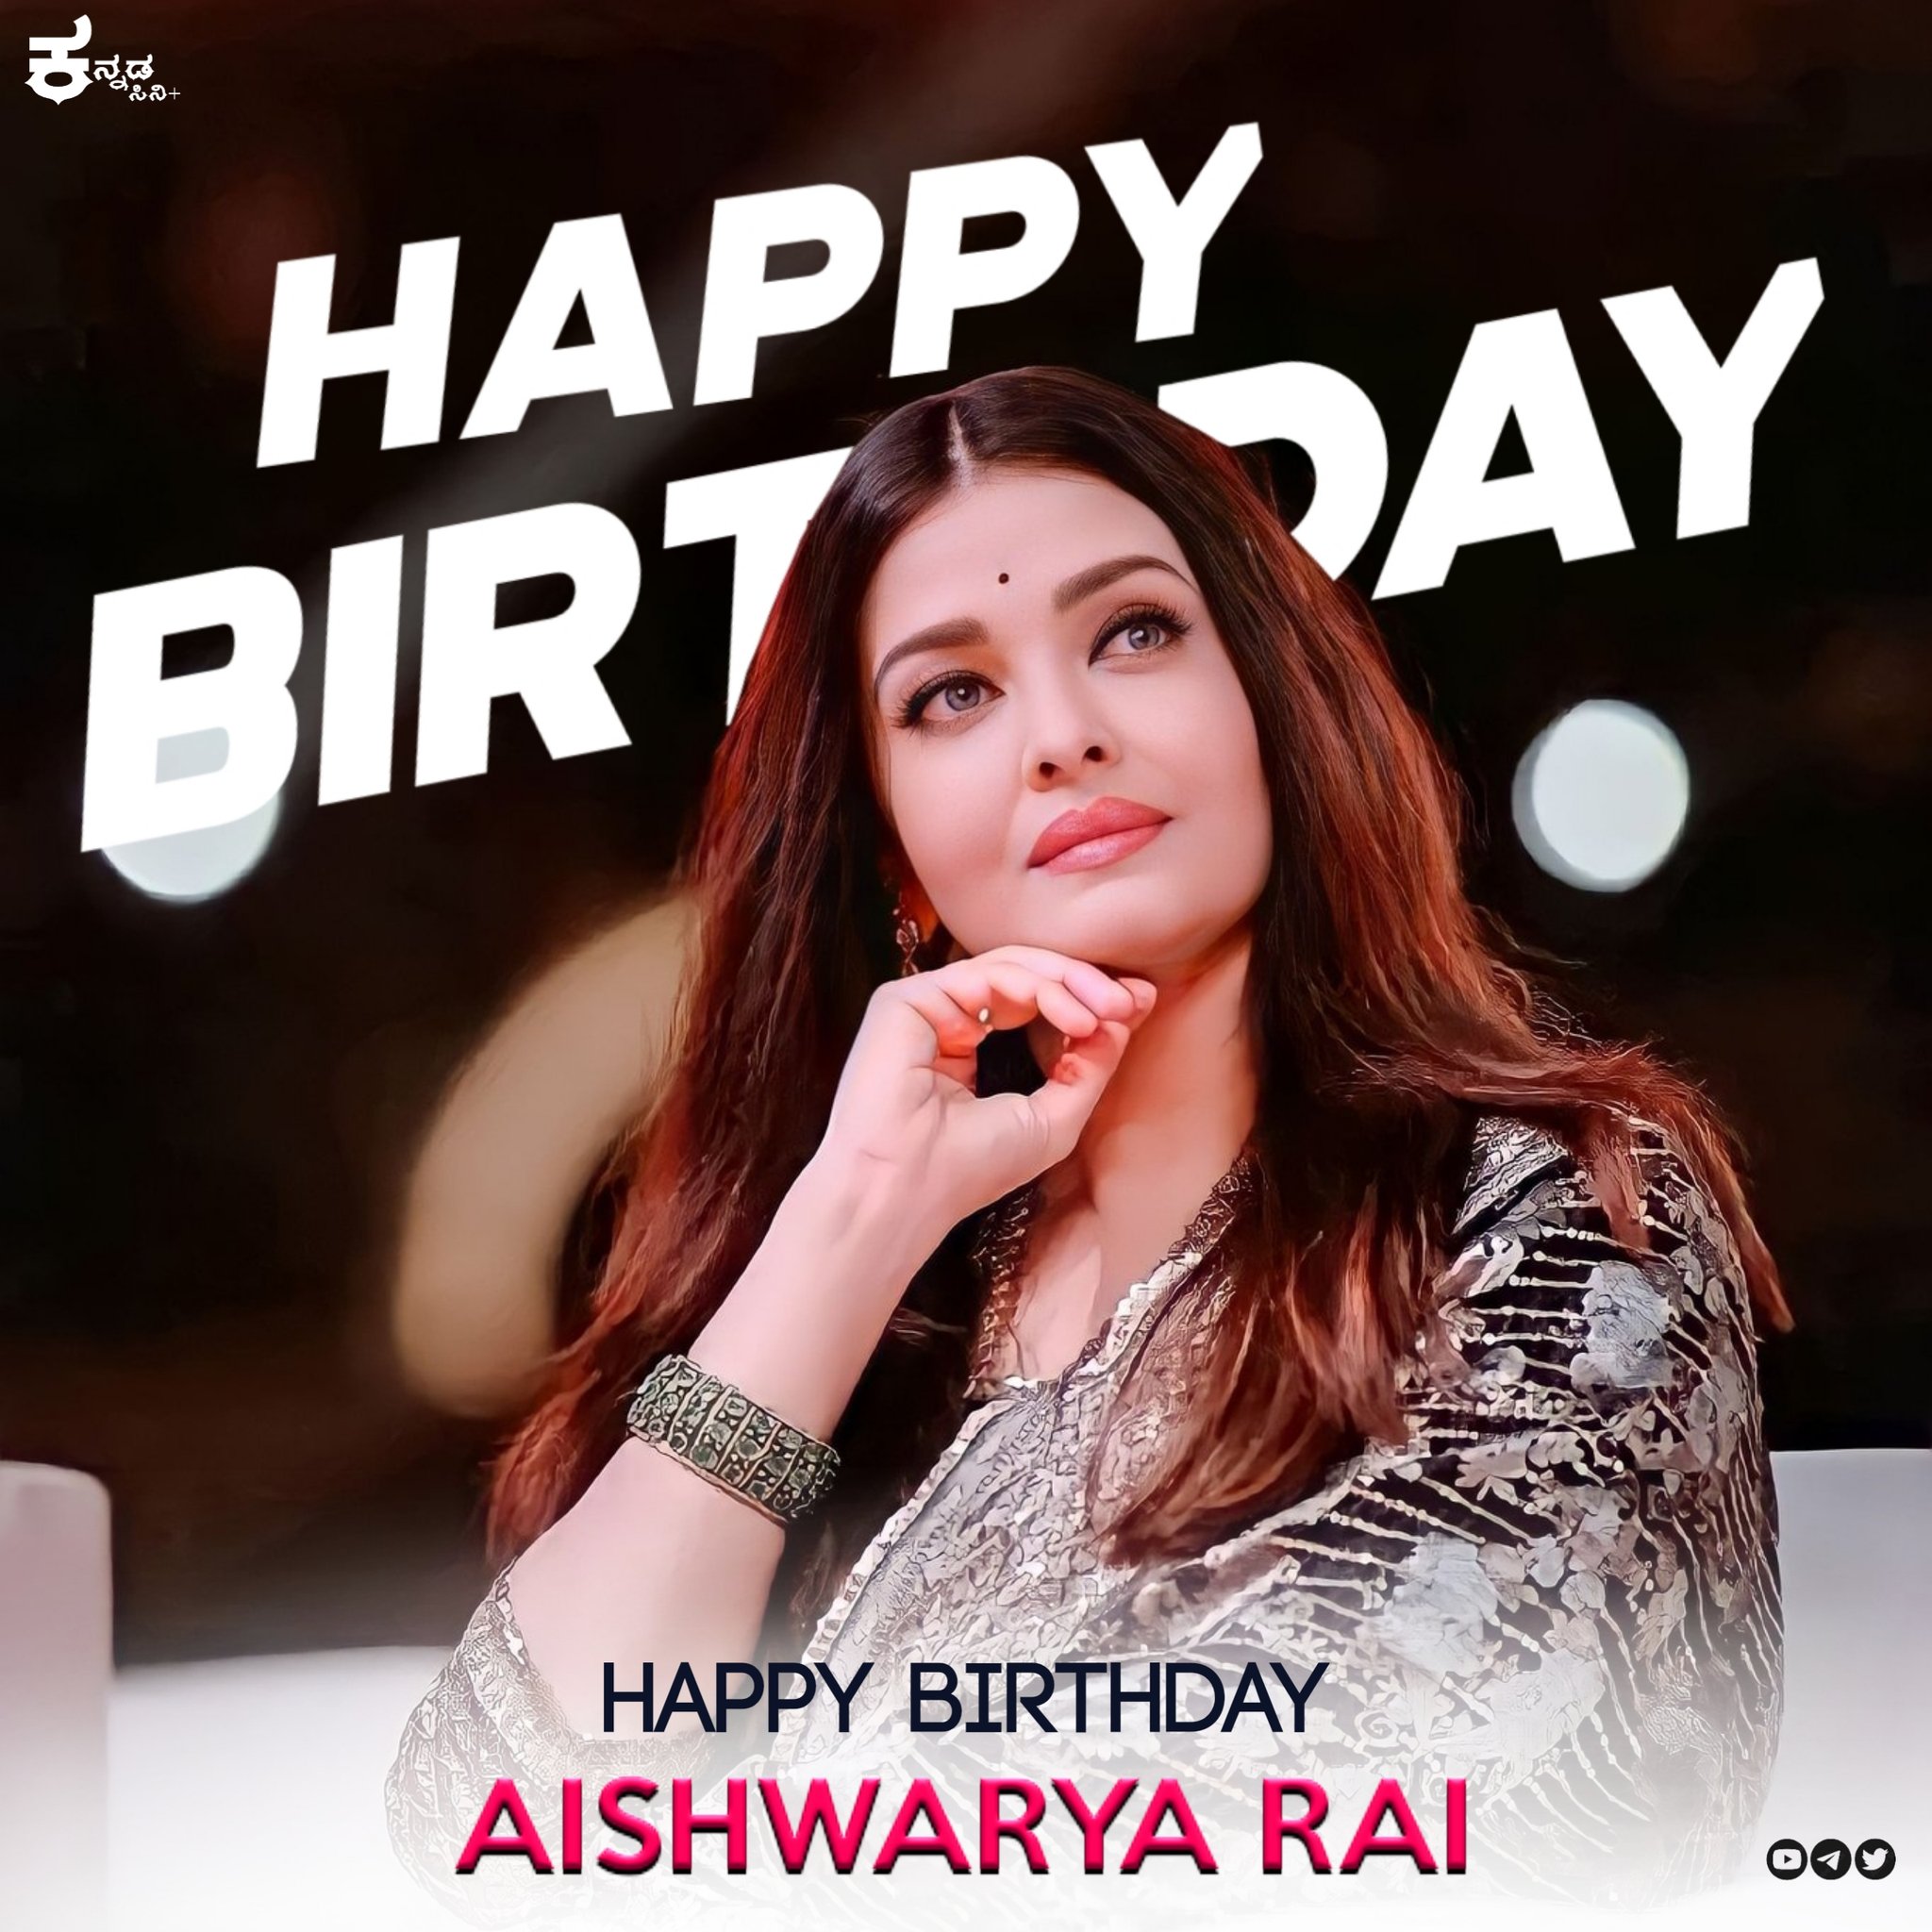 Happy birthday, Aishwarya Rai Bachchan 🎂 / Twitter